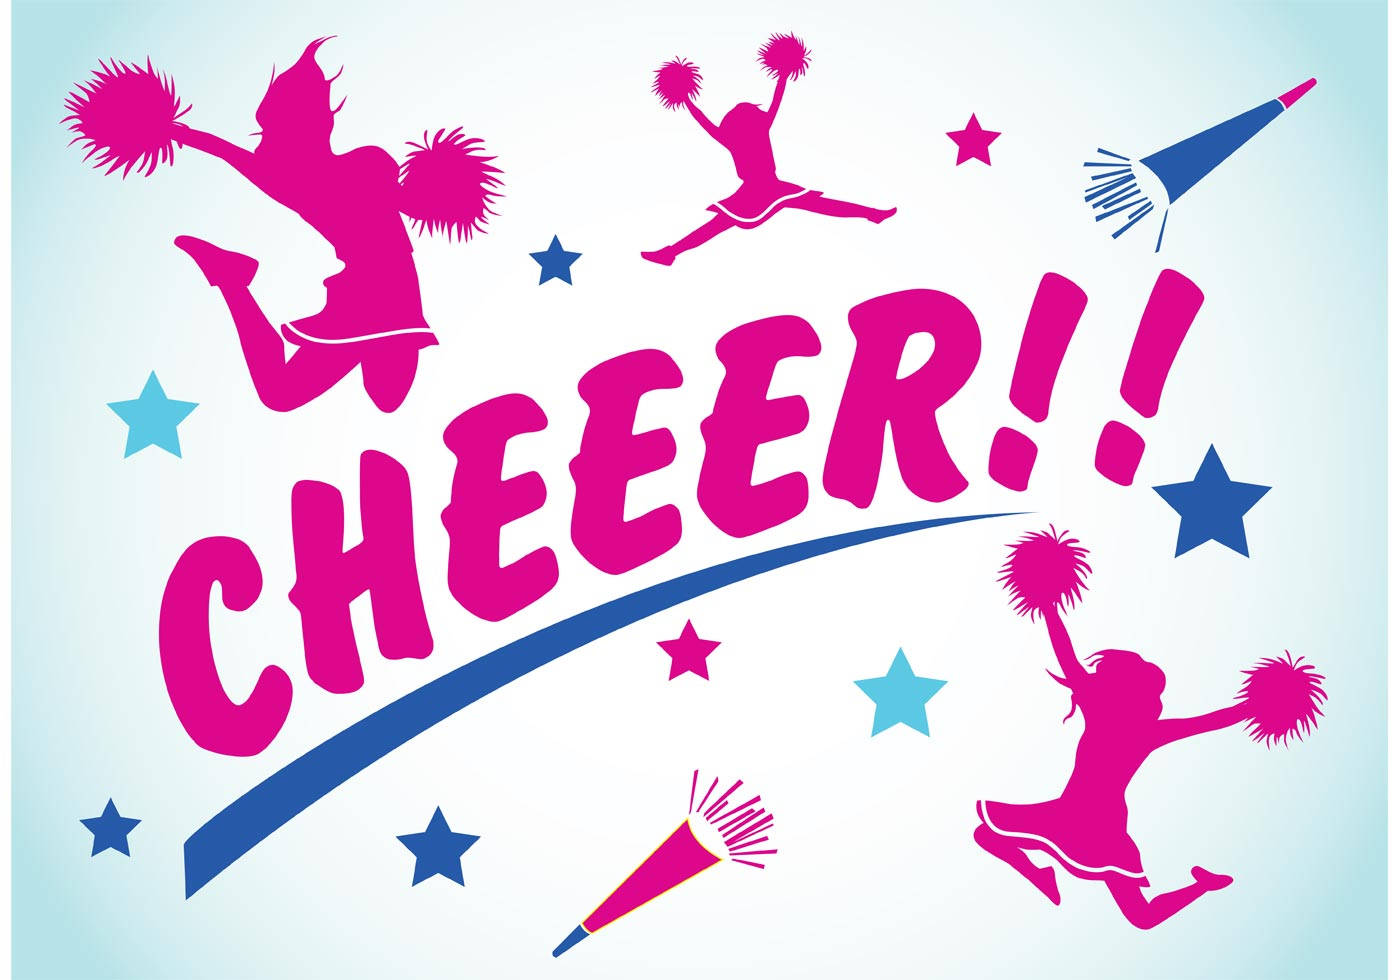 Download Cheerleader Pink And Blue Wallpaper